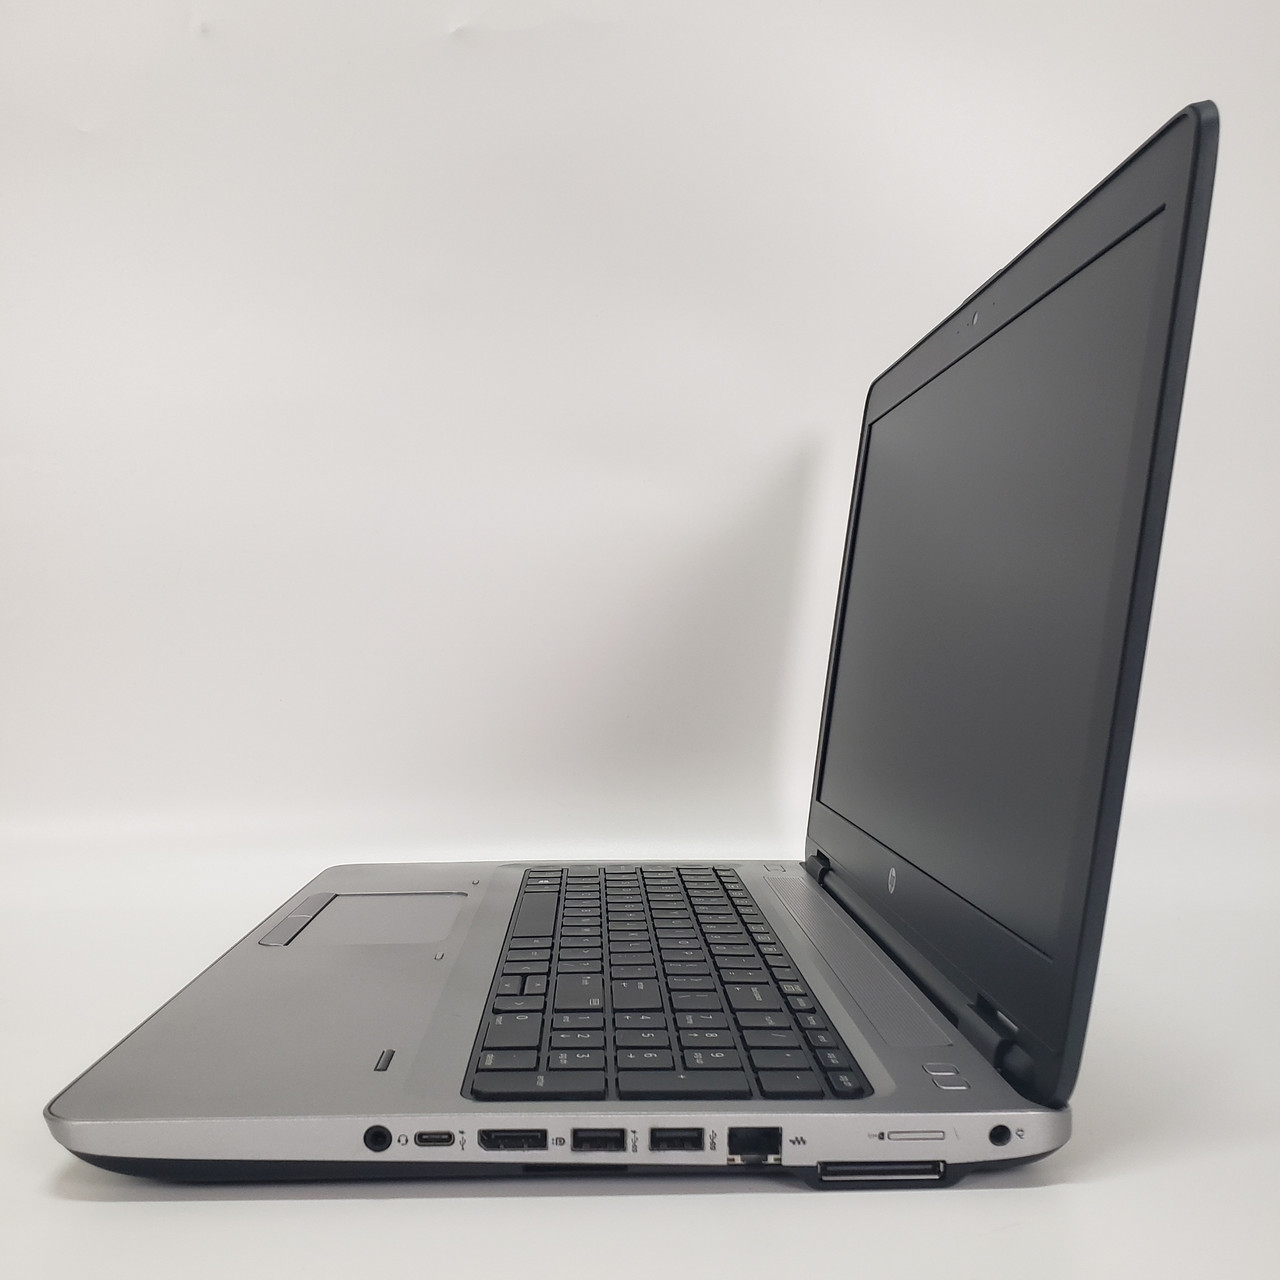 HP ProBook 655 G2 No OS A6-8500B 8GB RAM 500GB HDD | Grade B